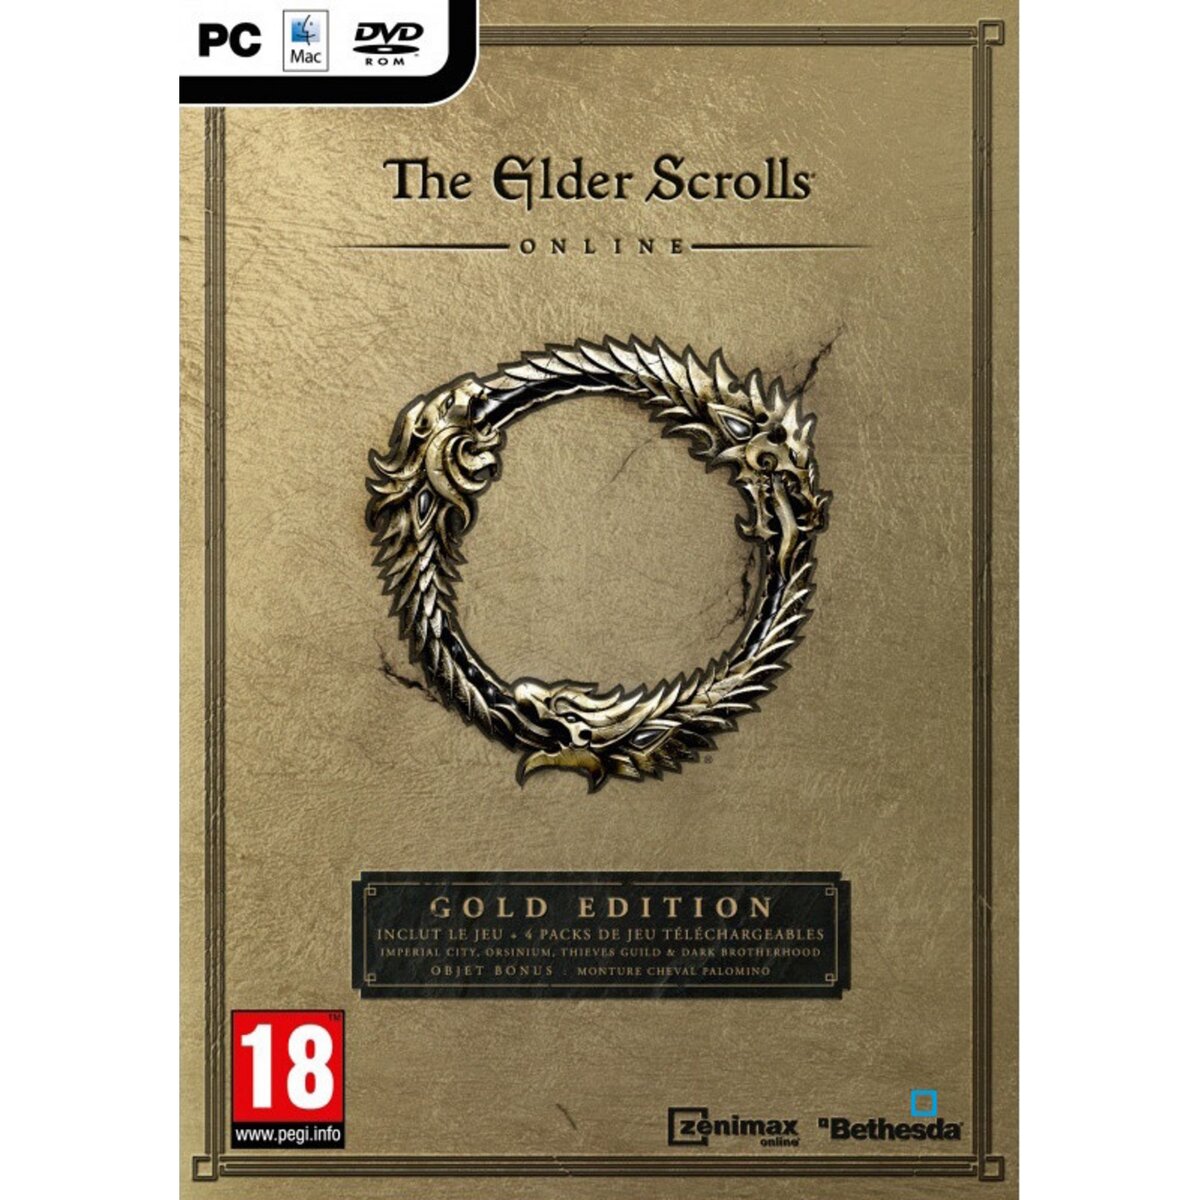 The Elder Scrolls Online - Gold Edition PC